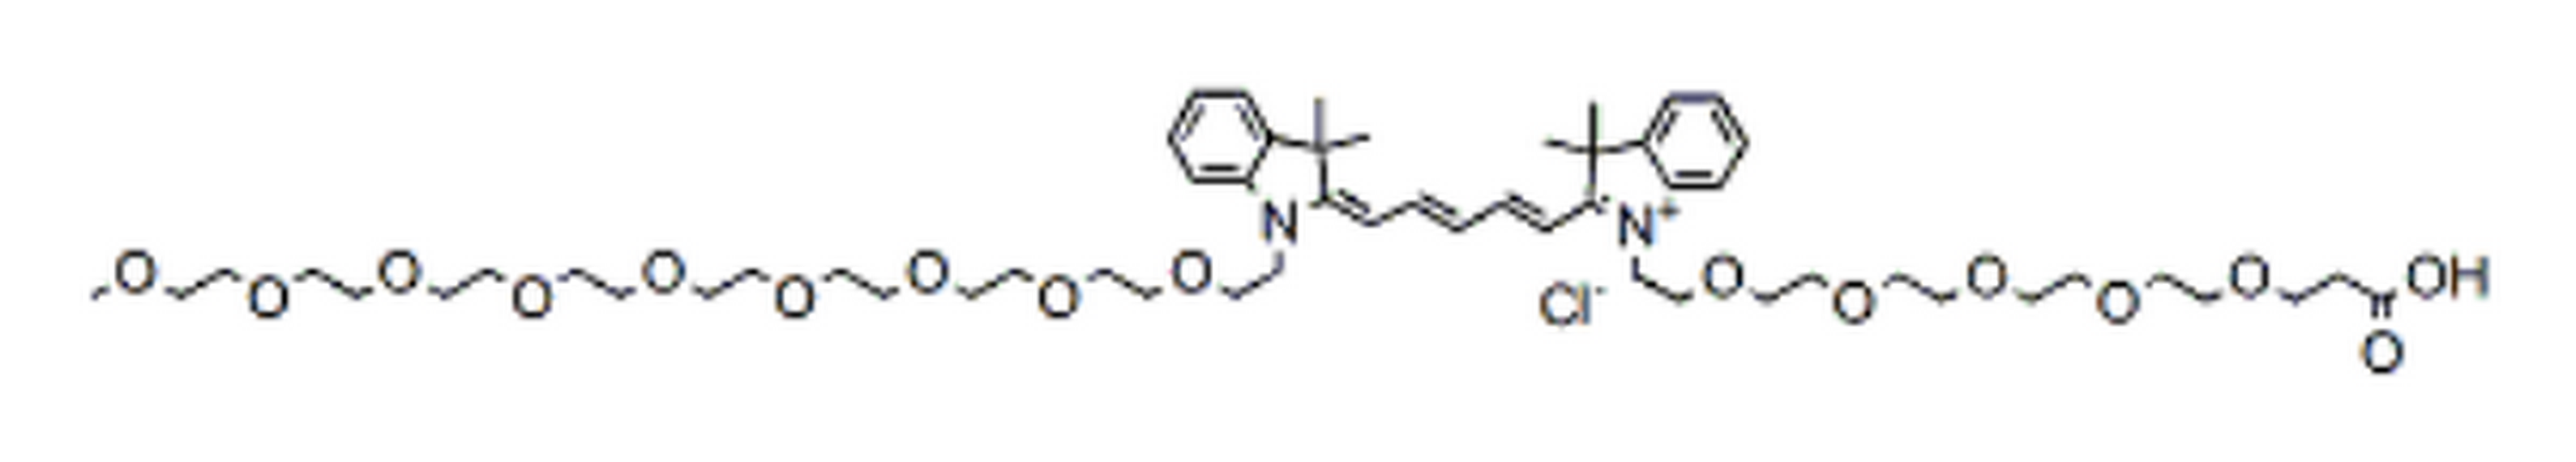 N-(m-PEG9)-N'-(PEG5-acid)-Cy5